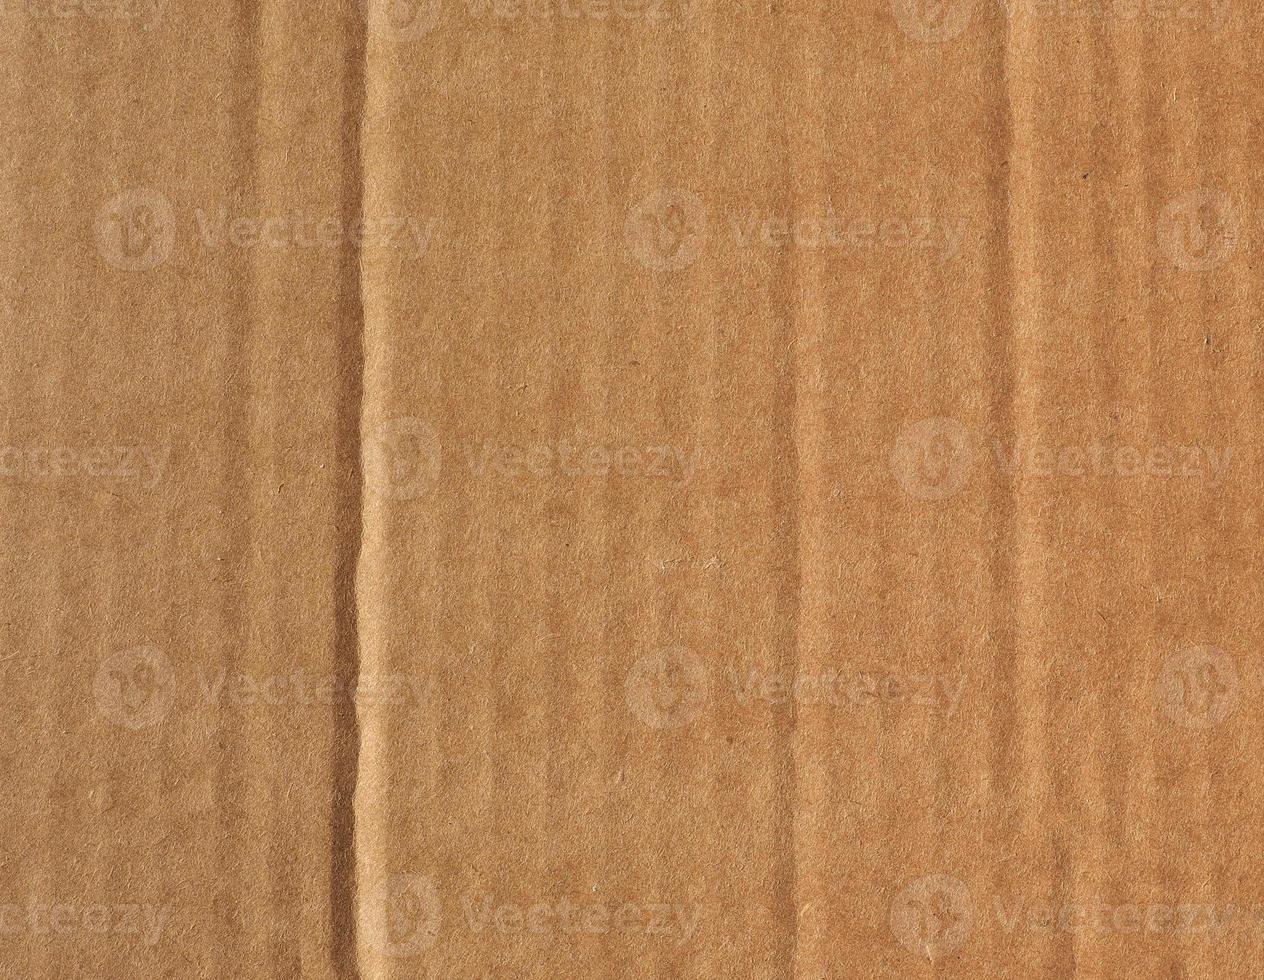 Corrugated cardboard texture background photo